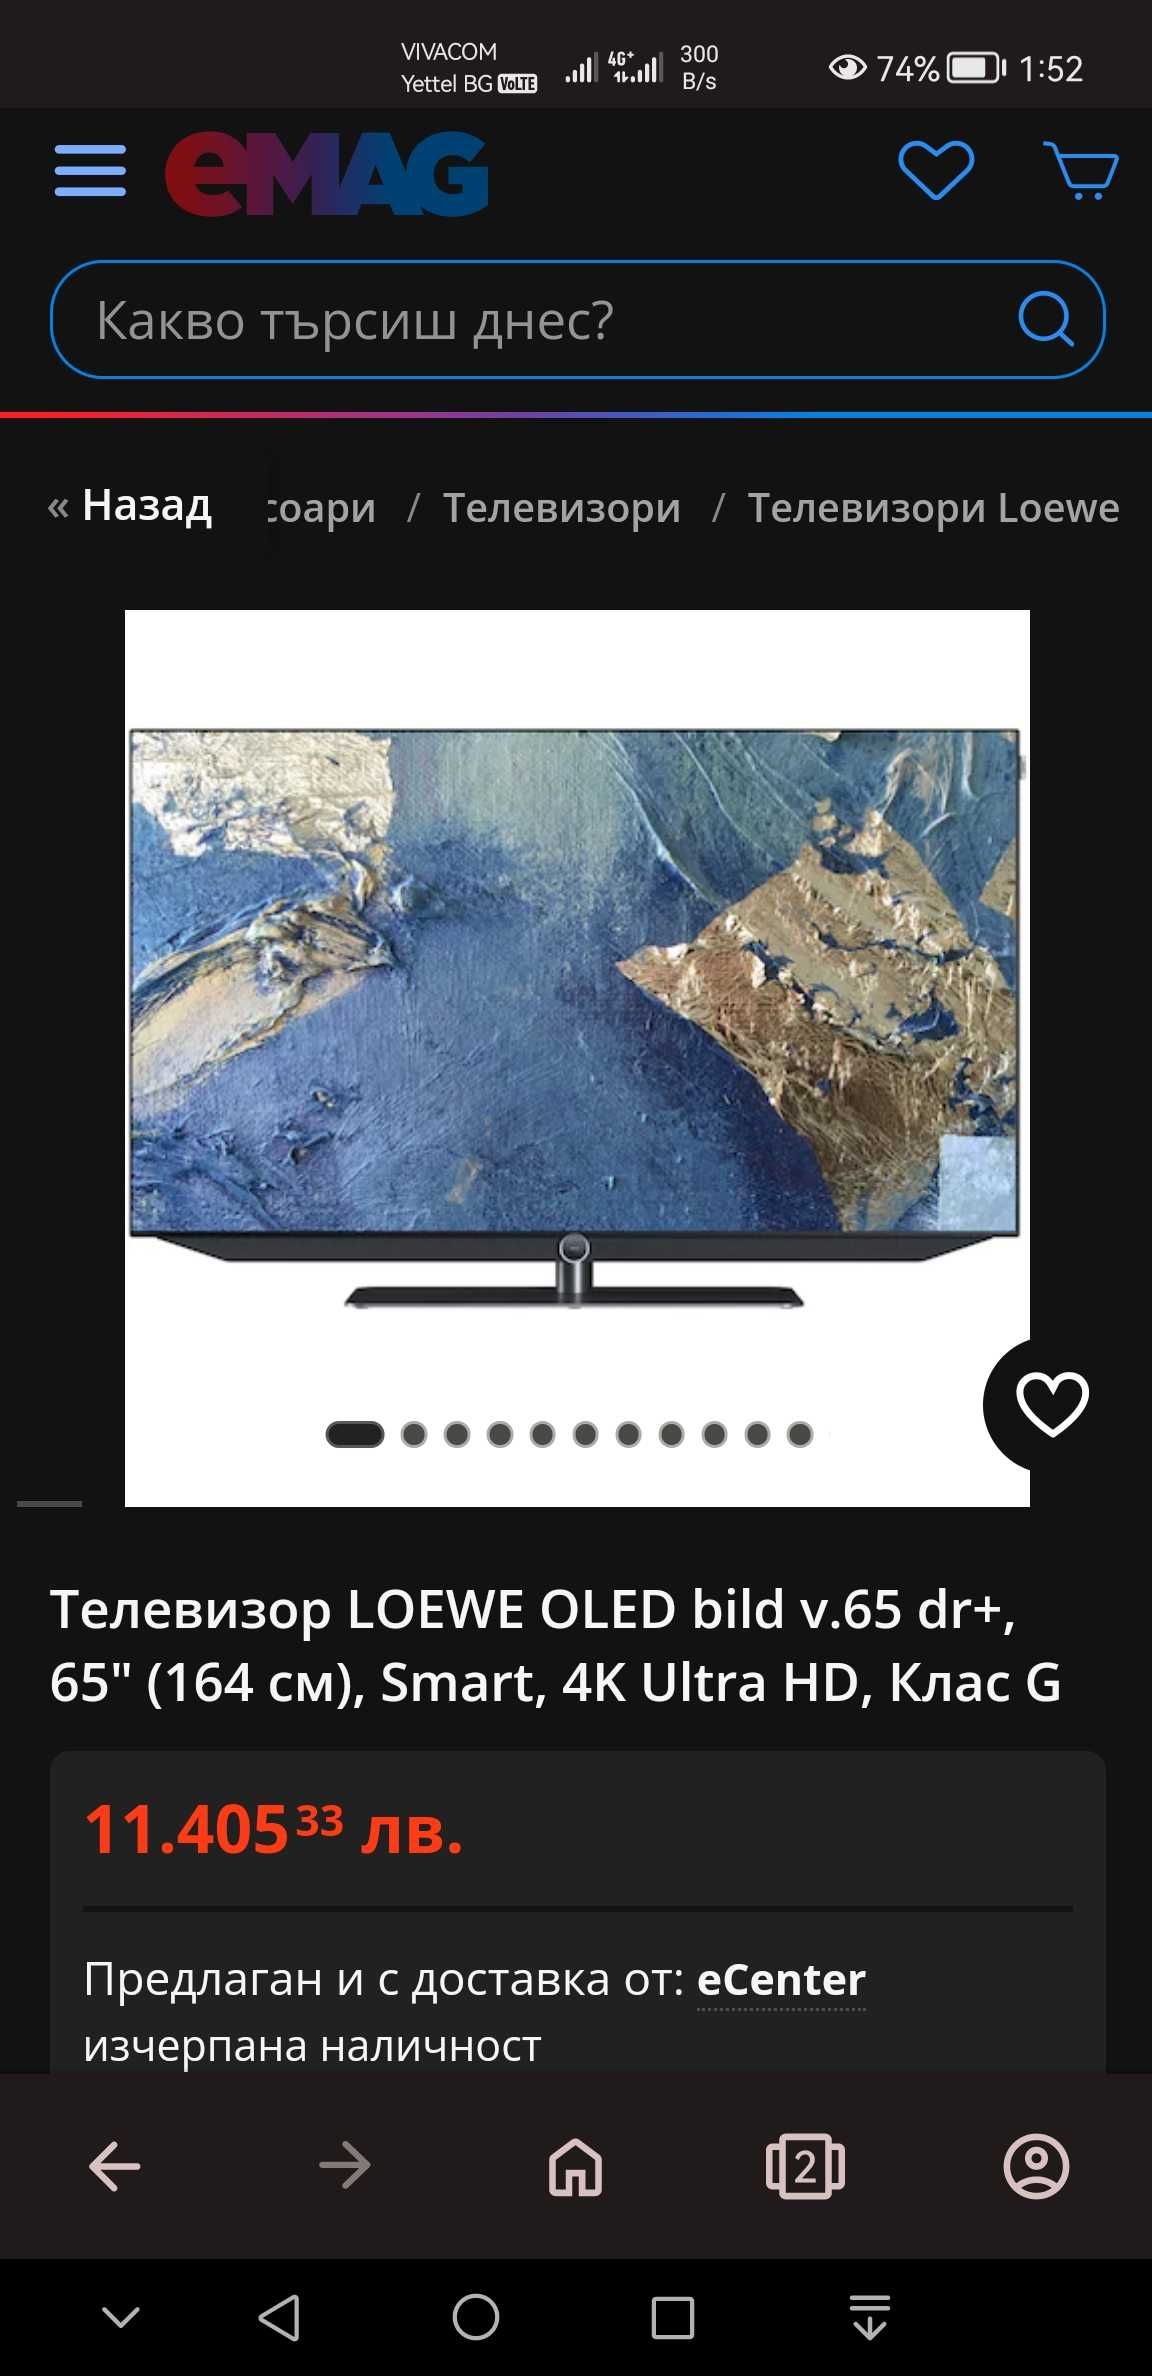 Smart Смарт Tелевизор LOEWE bild v.65dr+ OLED 4K